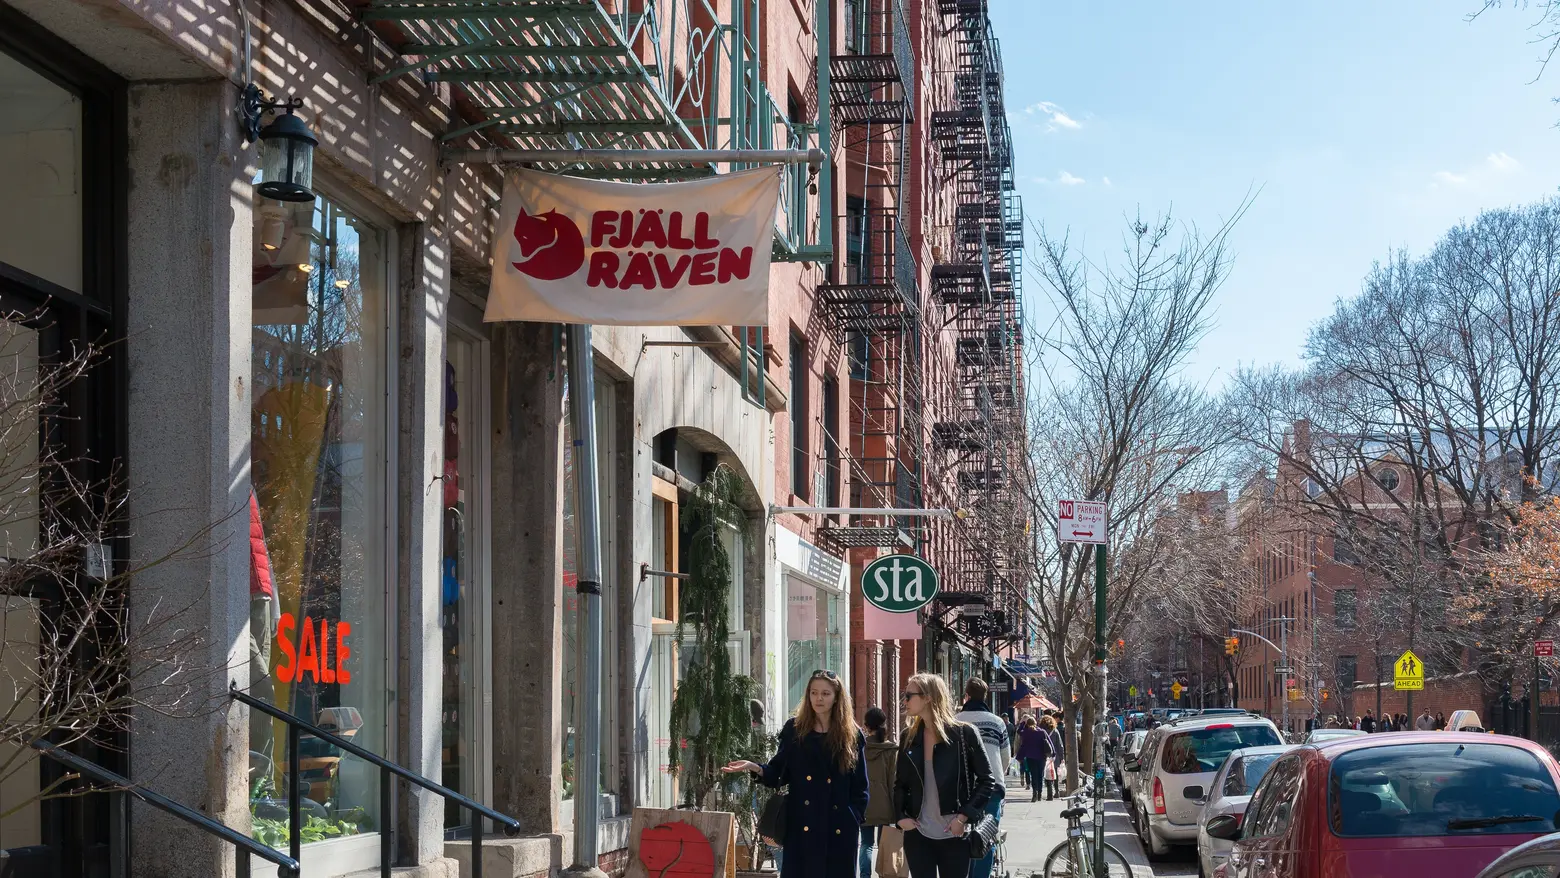 From NoLiTa to SoHa: The practice and controversy of rebranding NYC neighborhoods